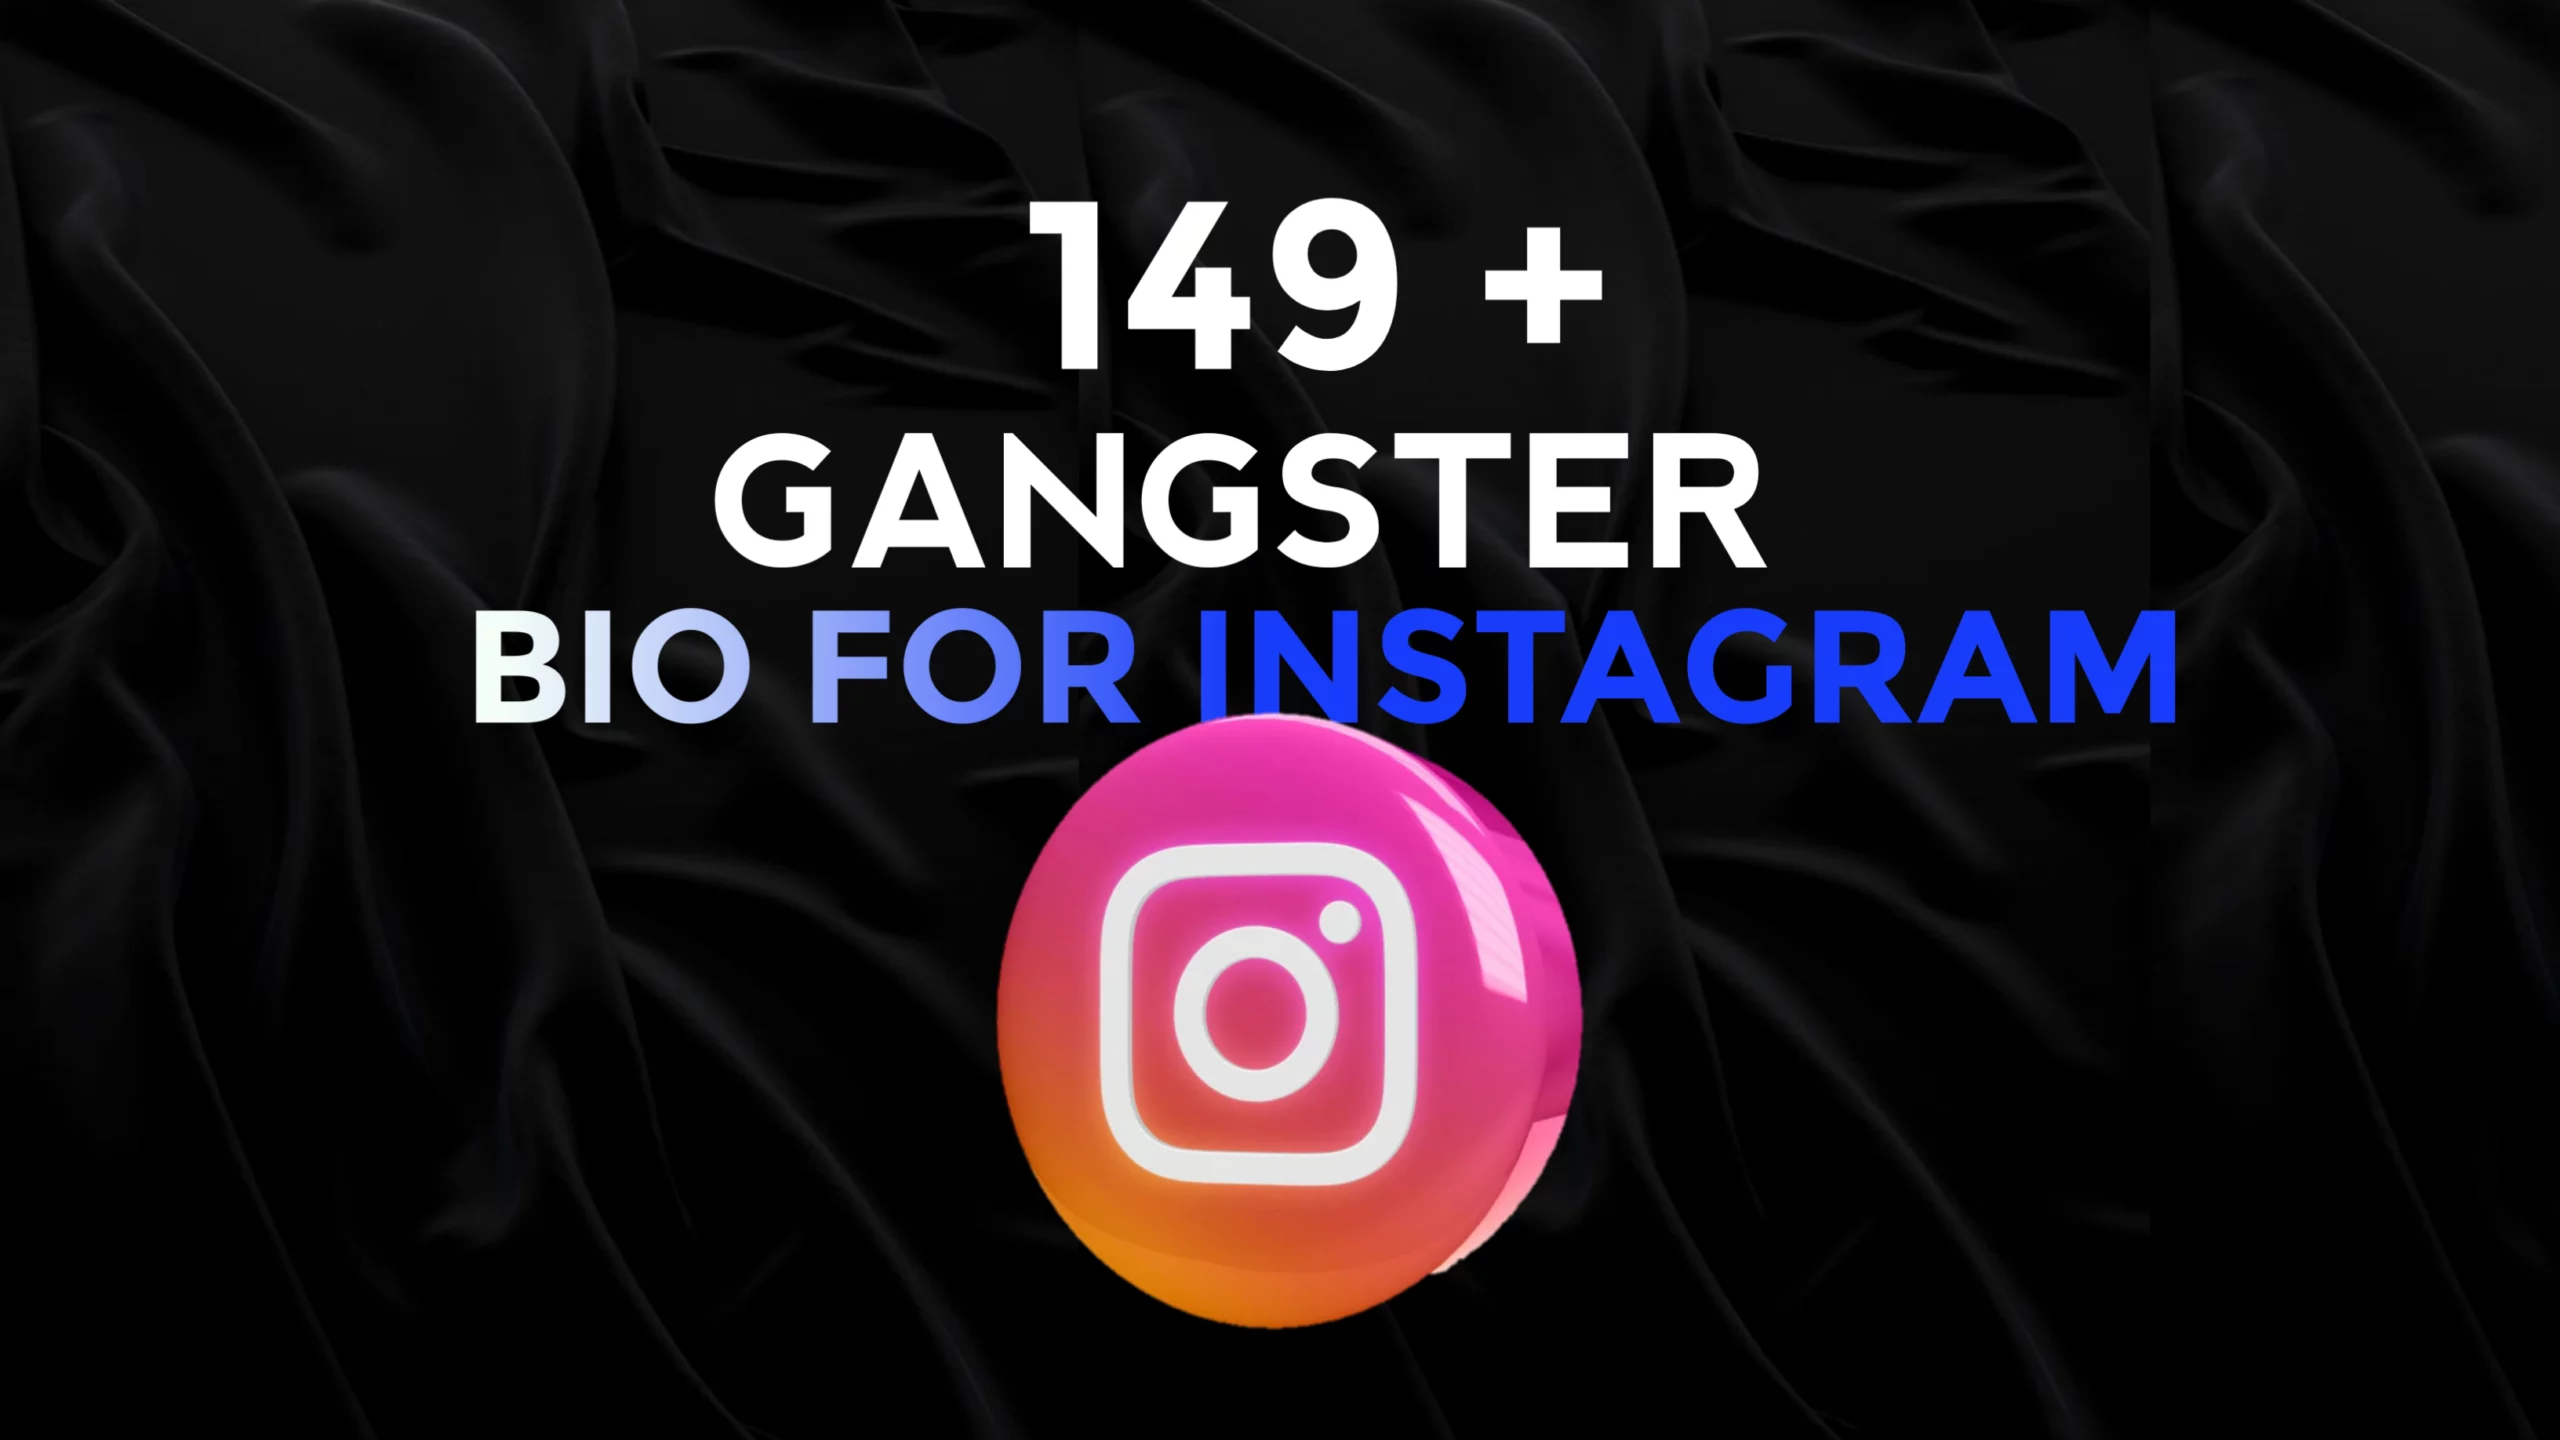 149+ Instagram Bio For Gangster | Attitude & Stylish Bio For Insta